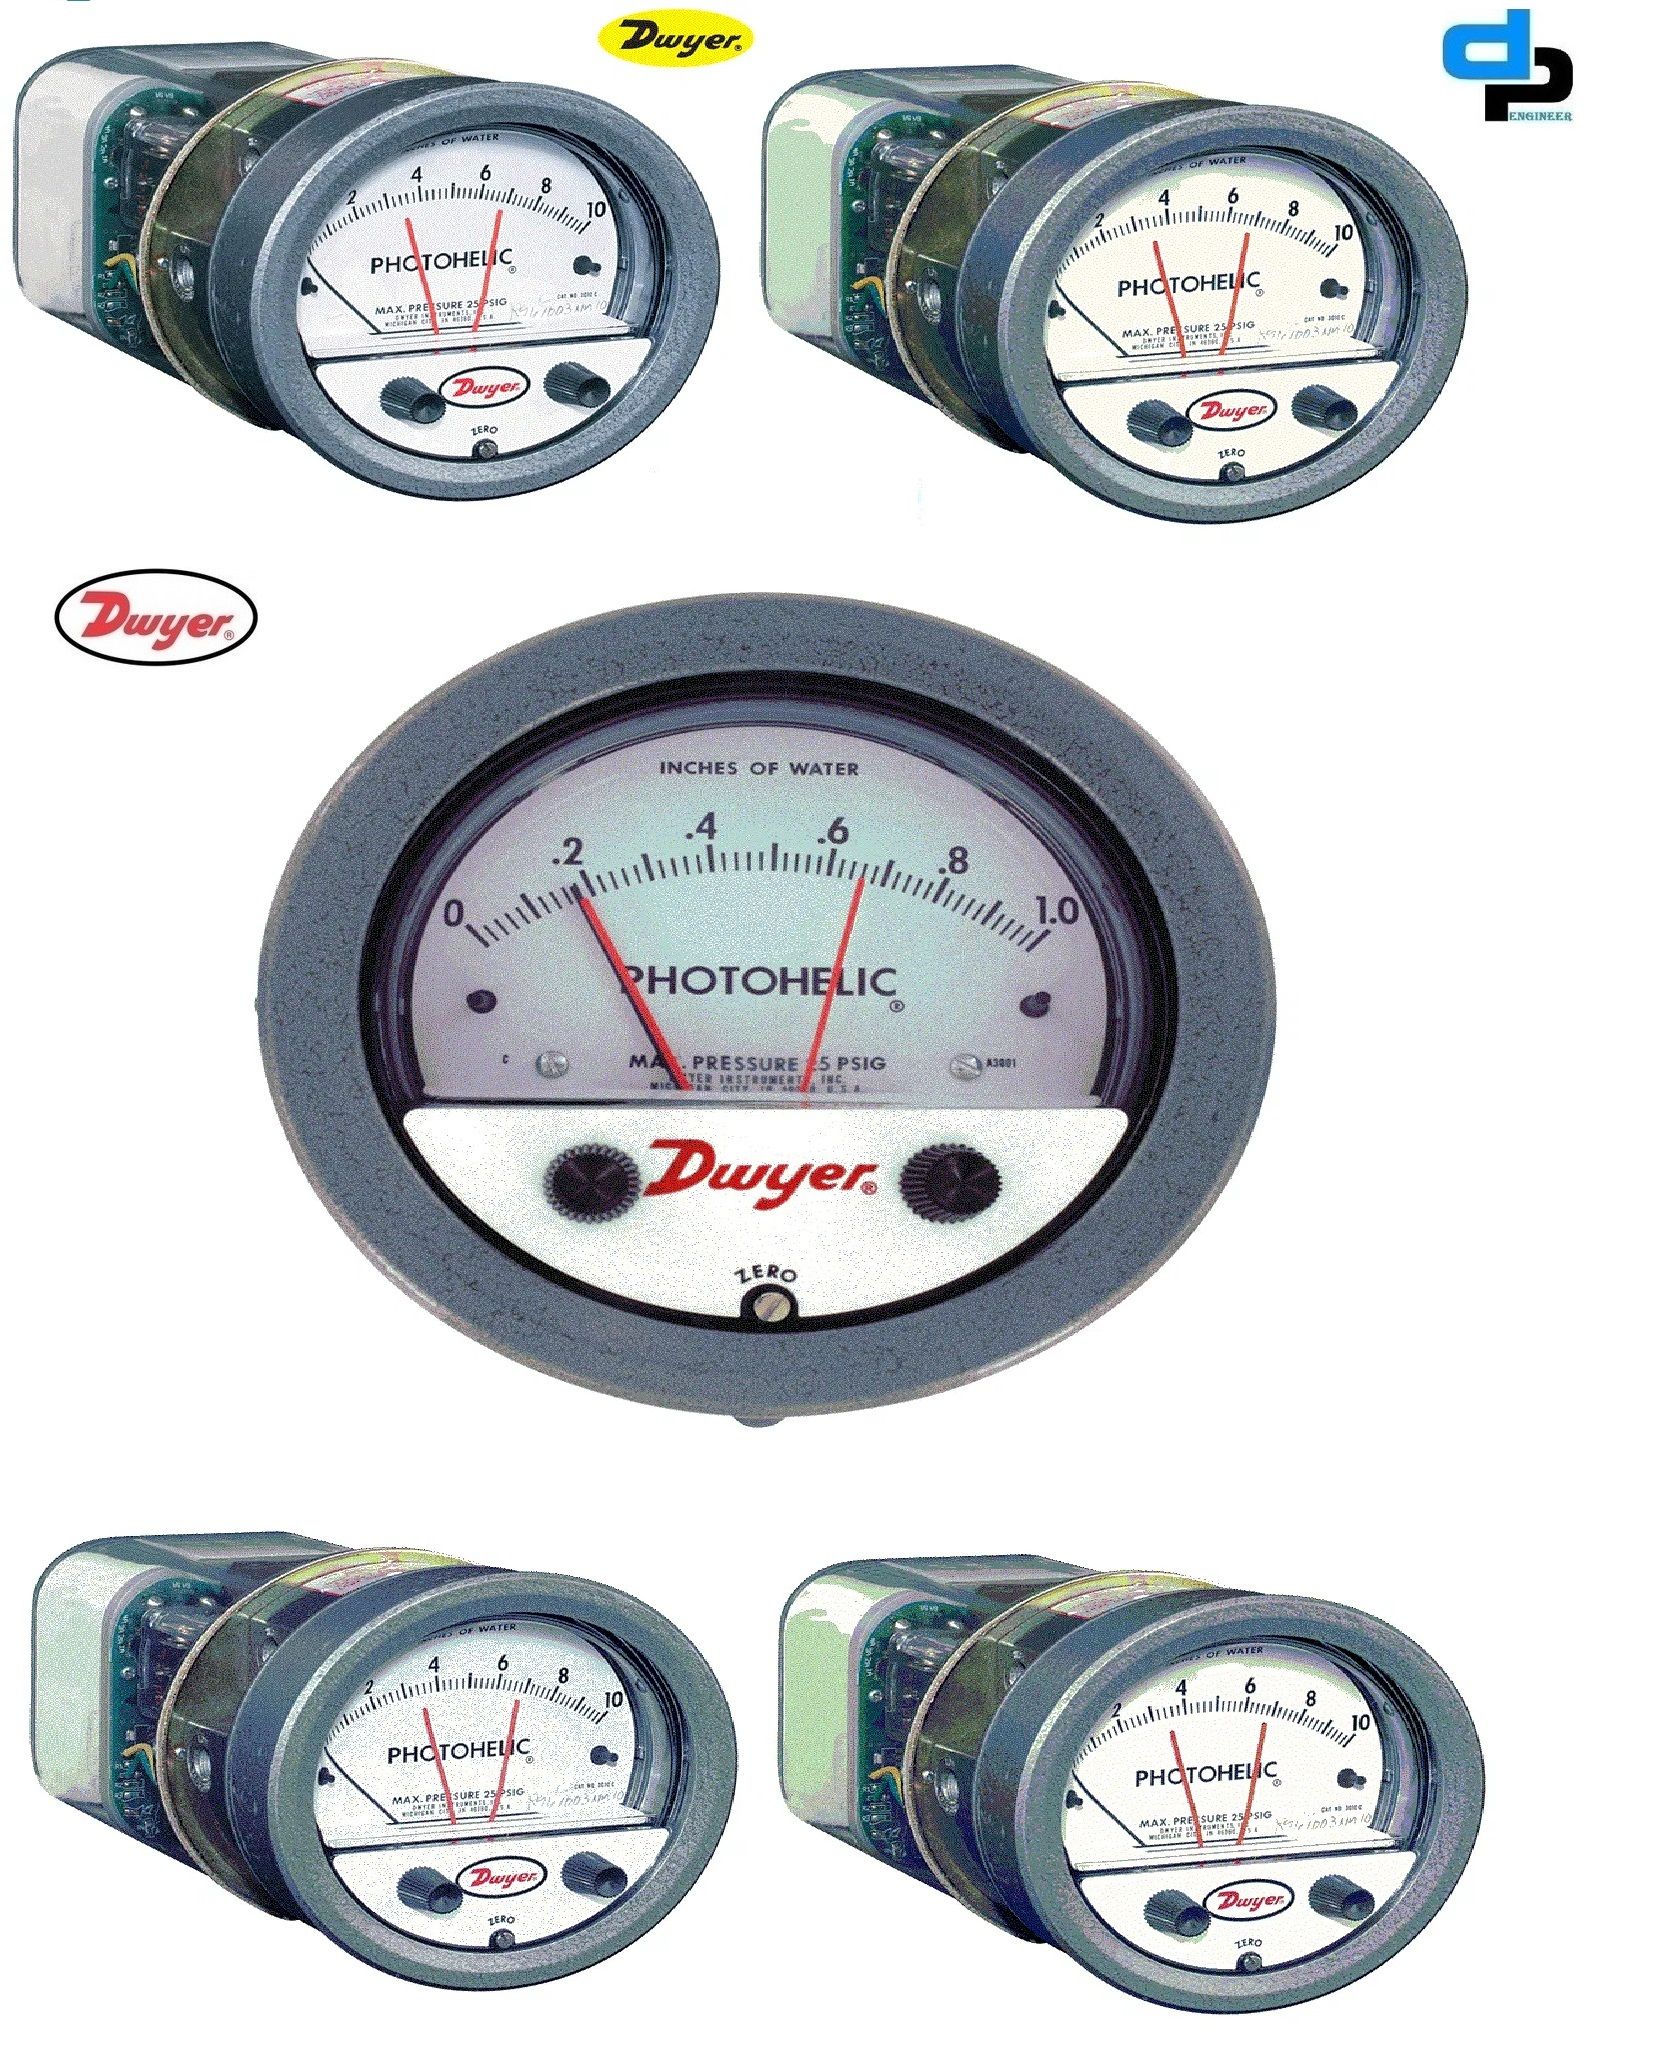 Dwyer A3000-100MM Photohelic Pressure Switch Gauge